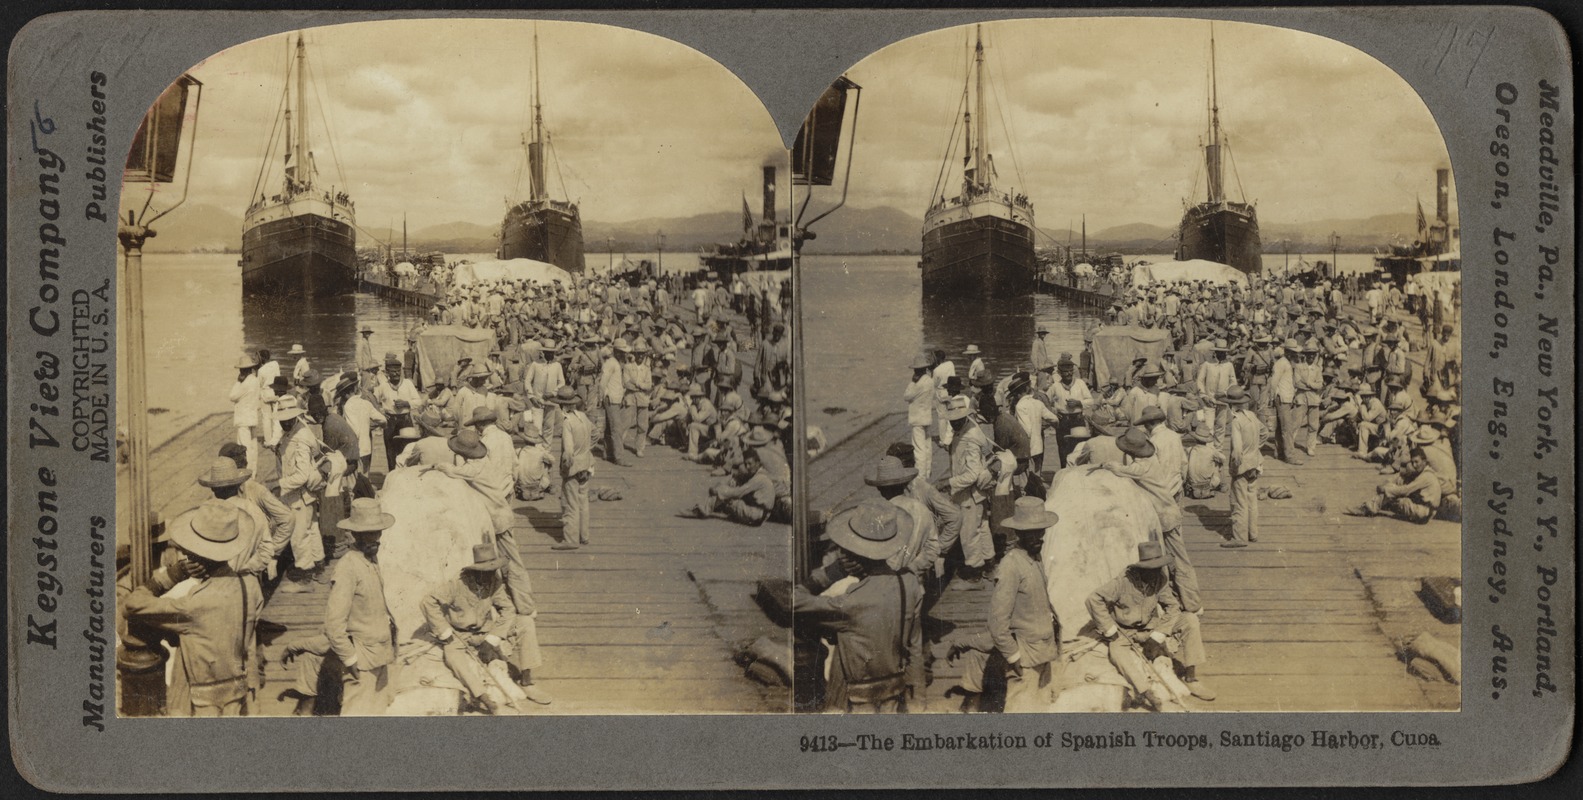 The embarkation of Spanish troops, Santiago Harbor, Cuba